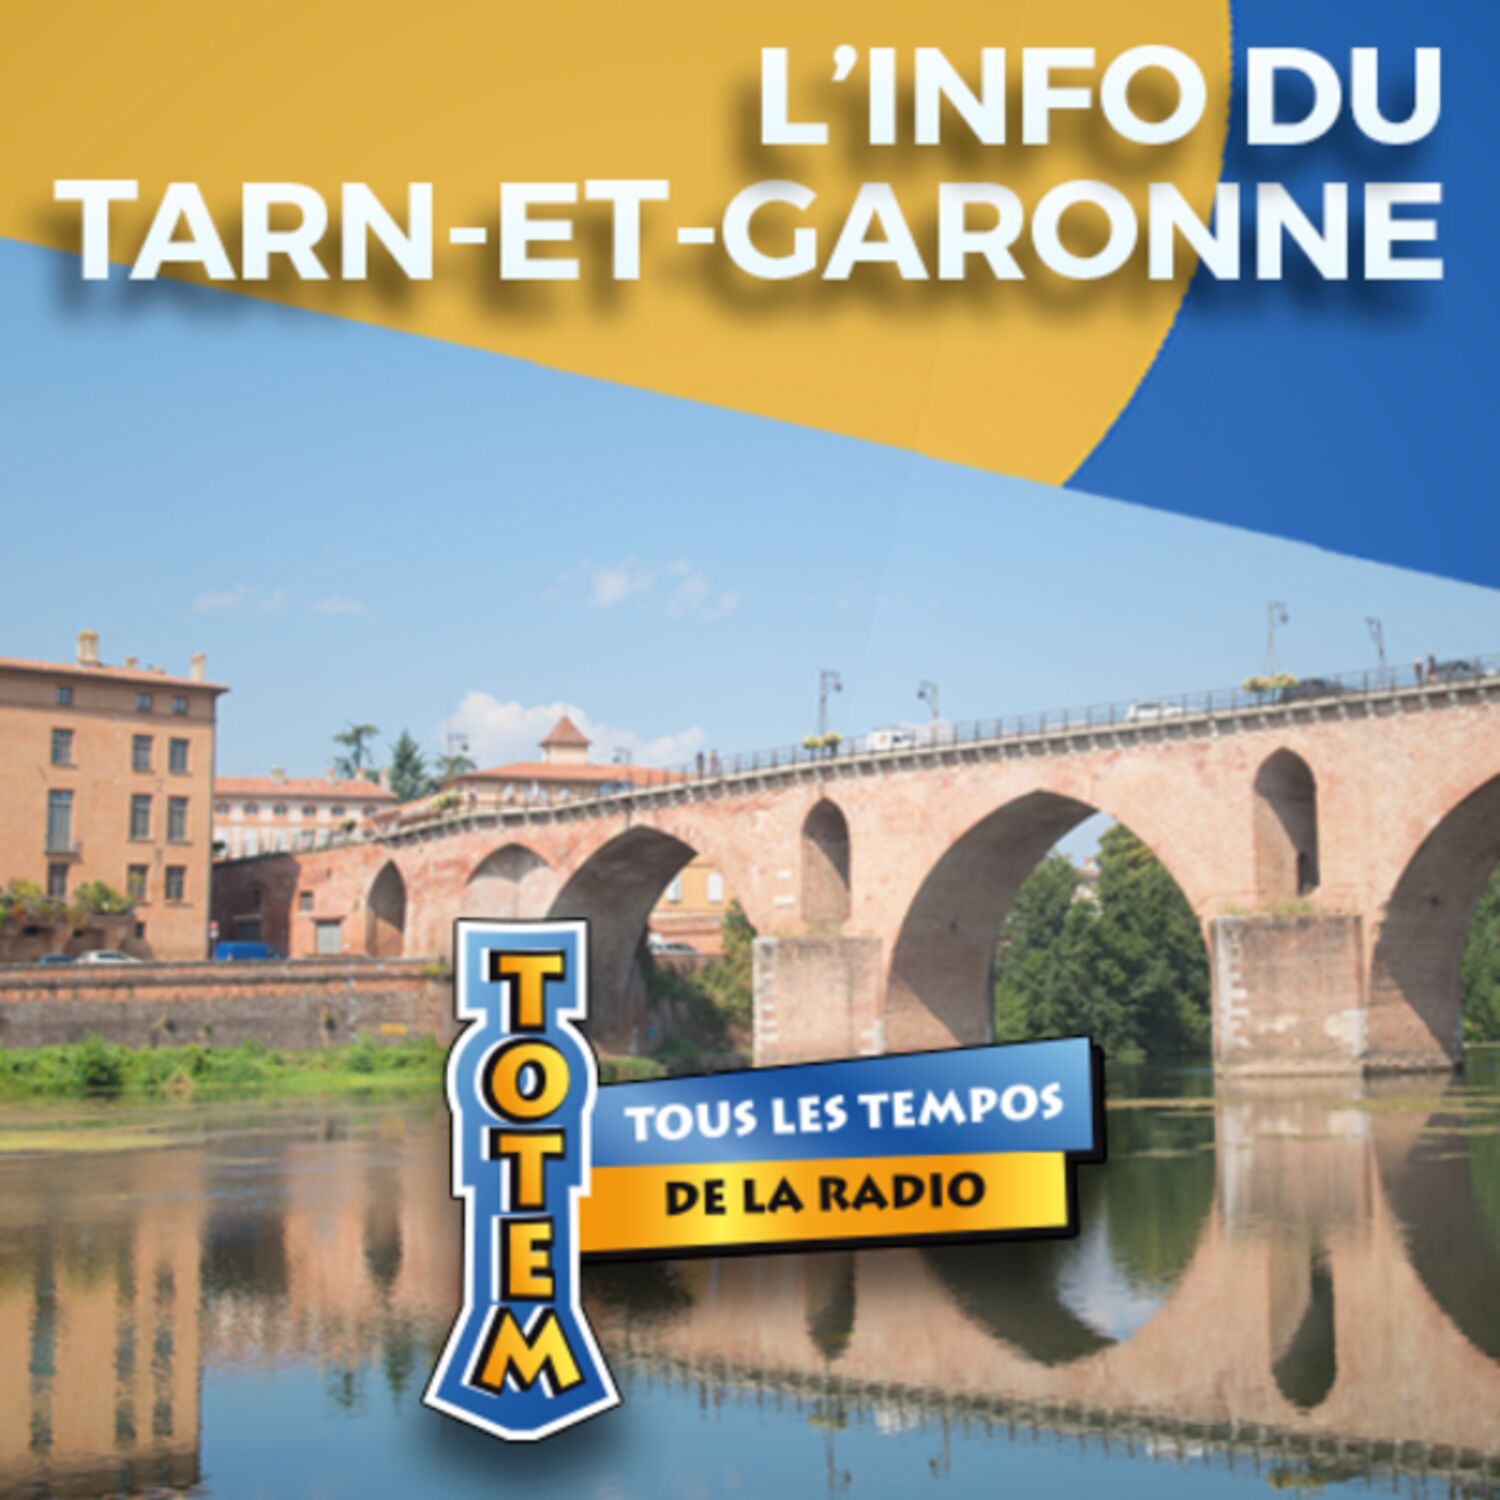 L'info du Tarn-et-Garonne du 13/04/23 à 12h28